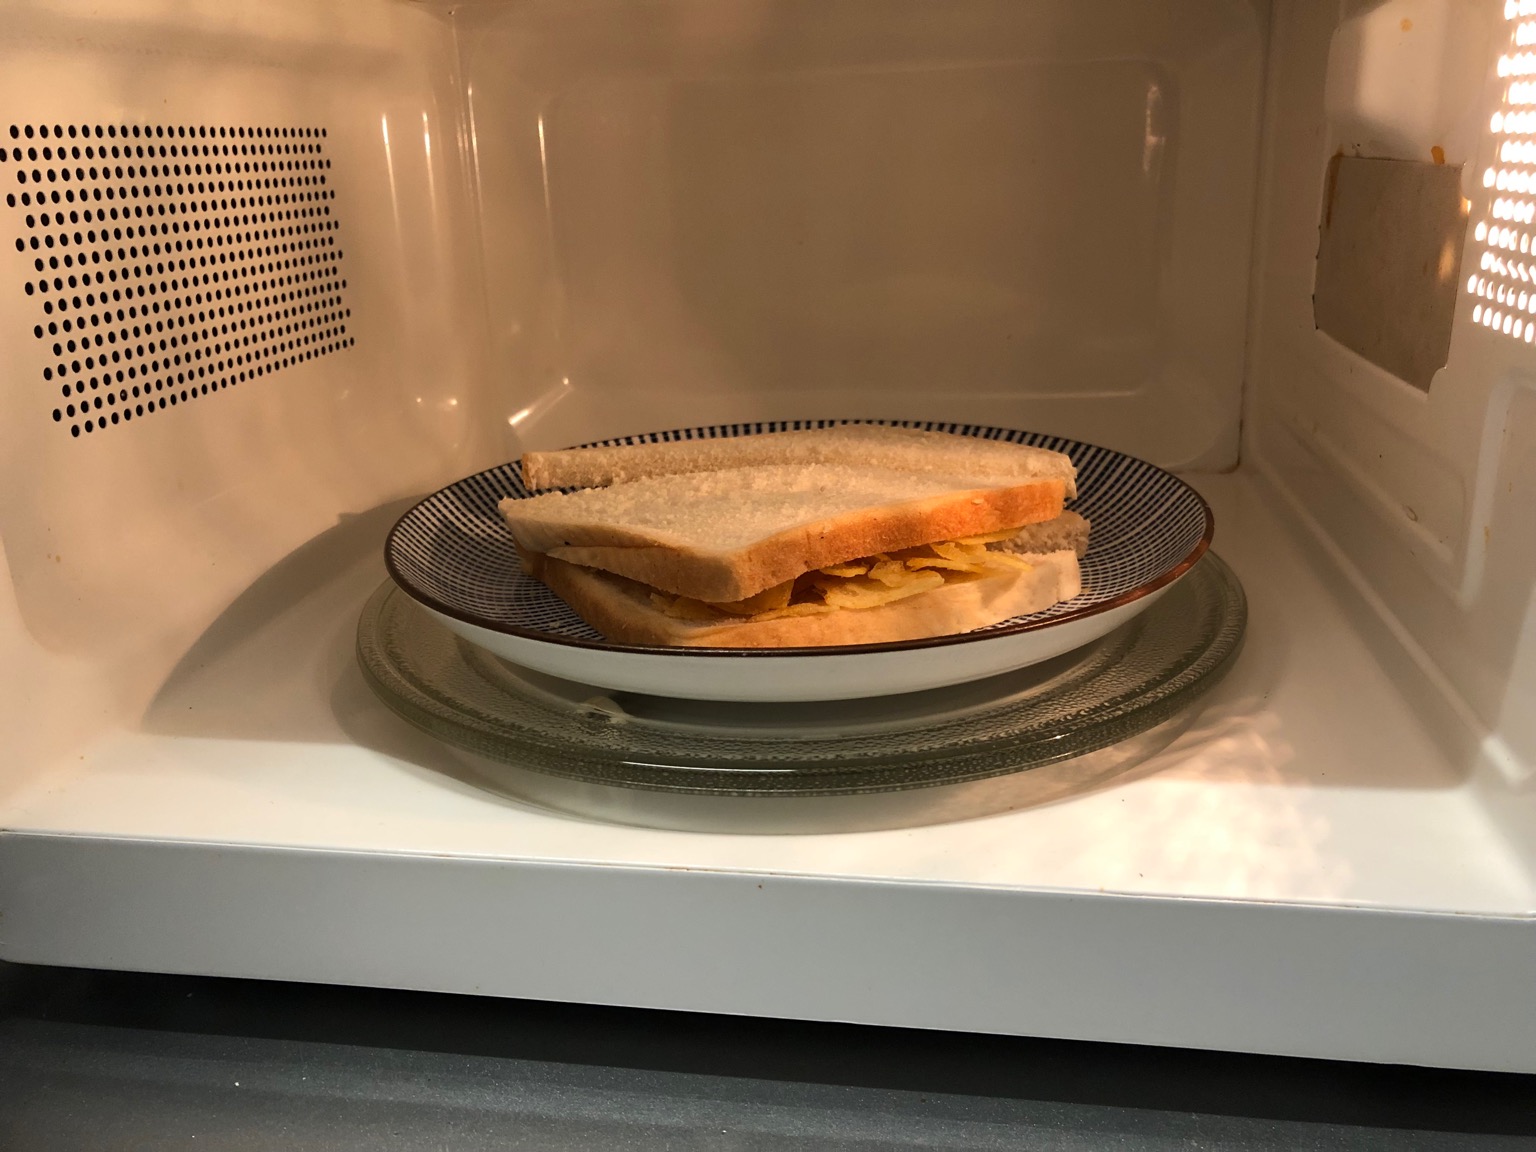 Diagonally-cut crisp sandwich in a microwave